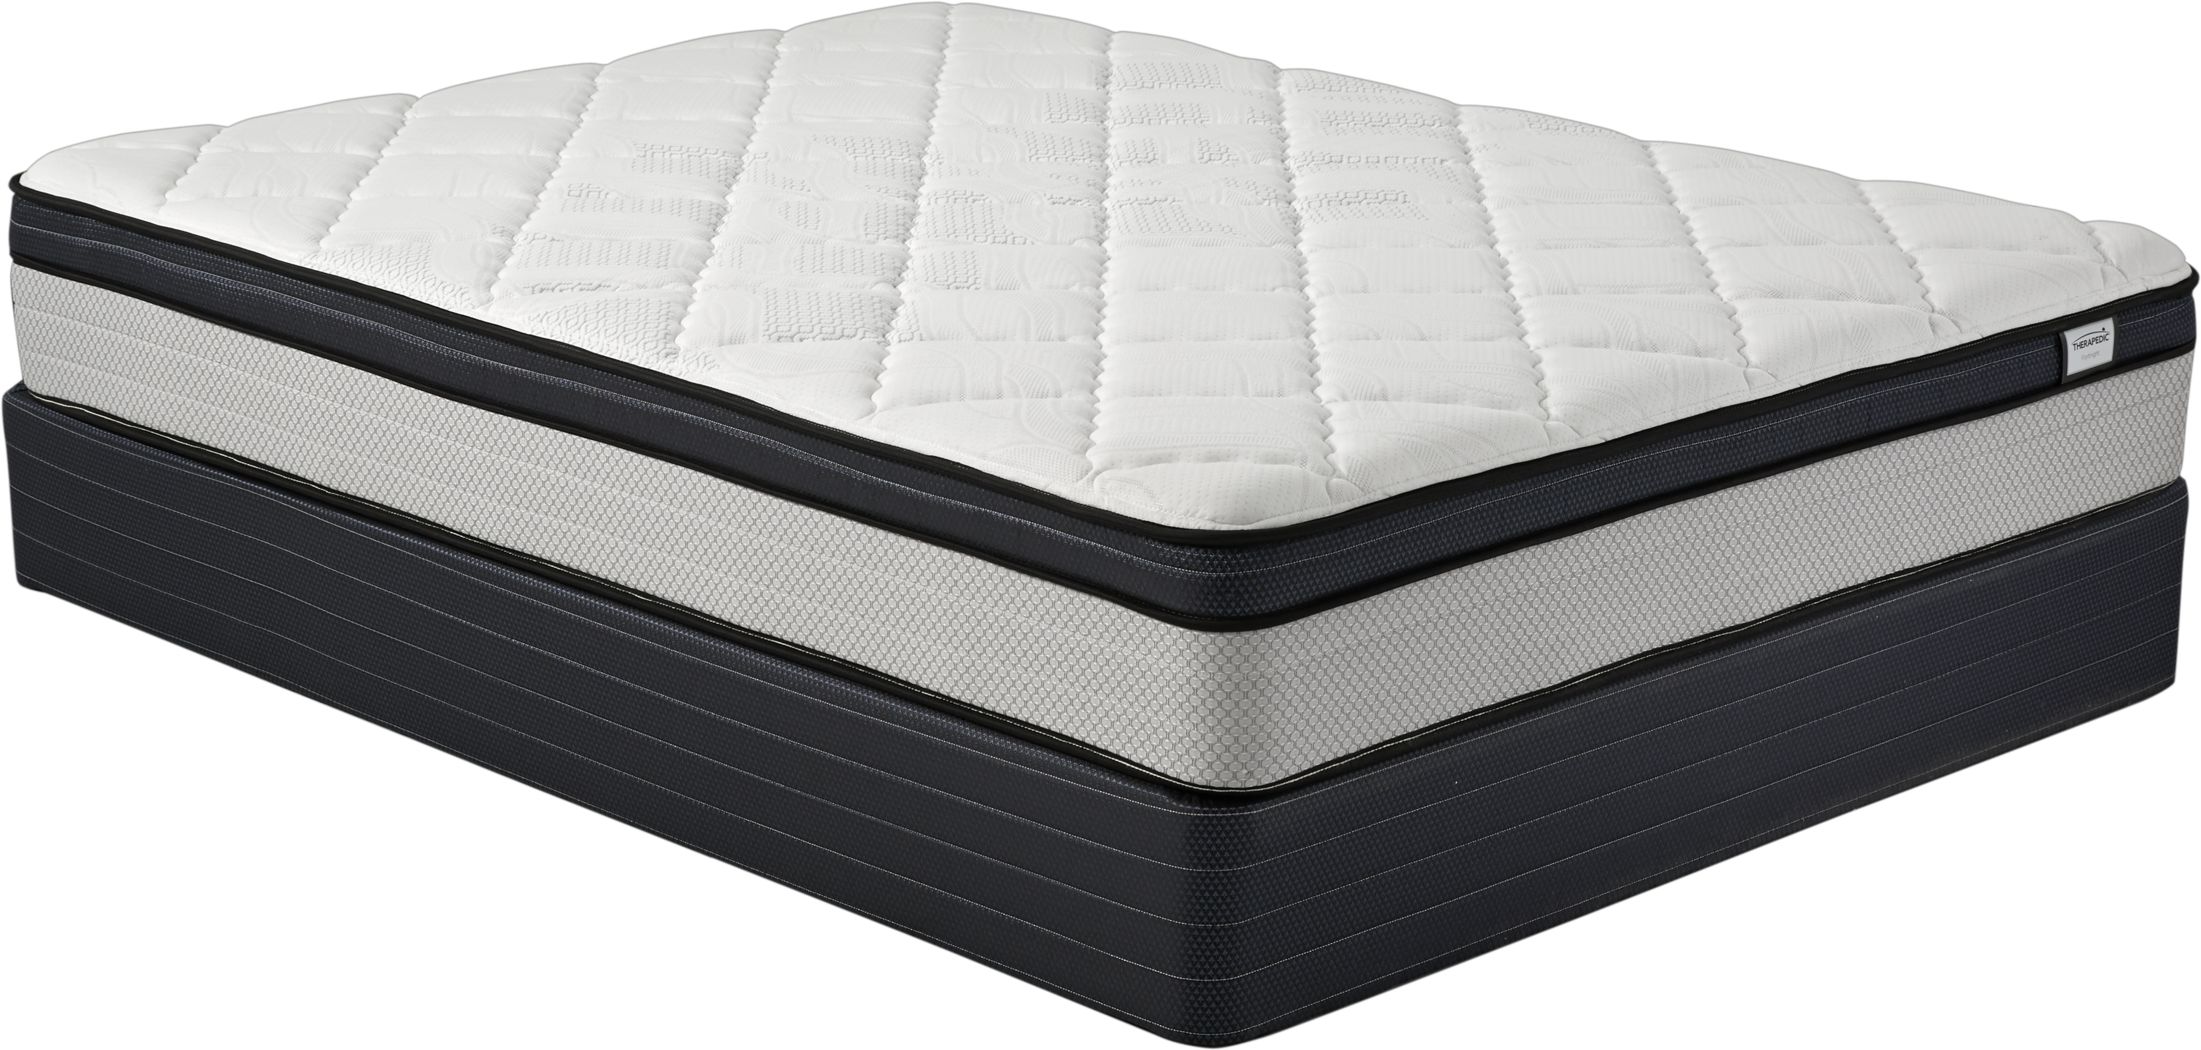 low profile queen mattress set